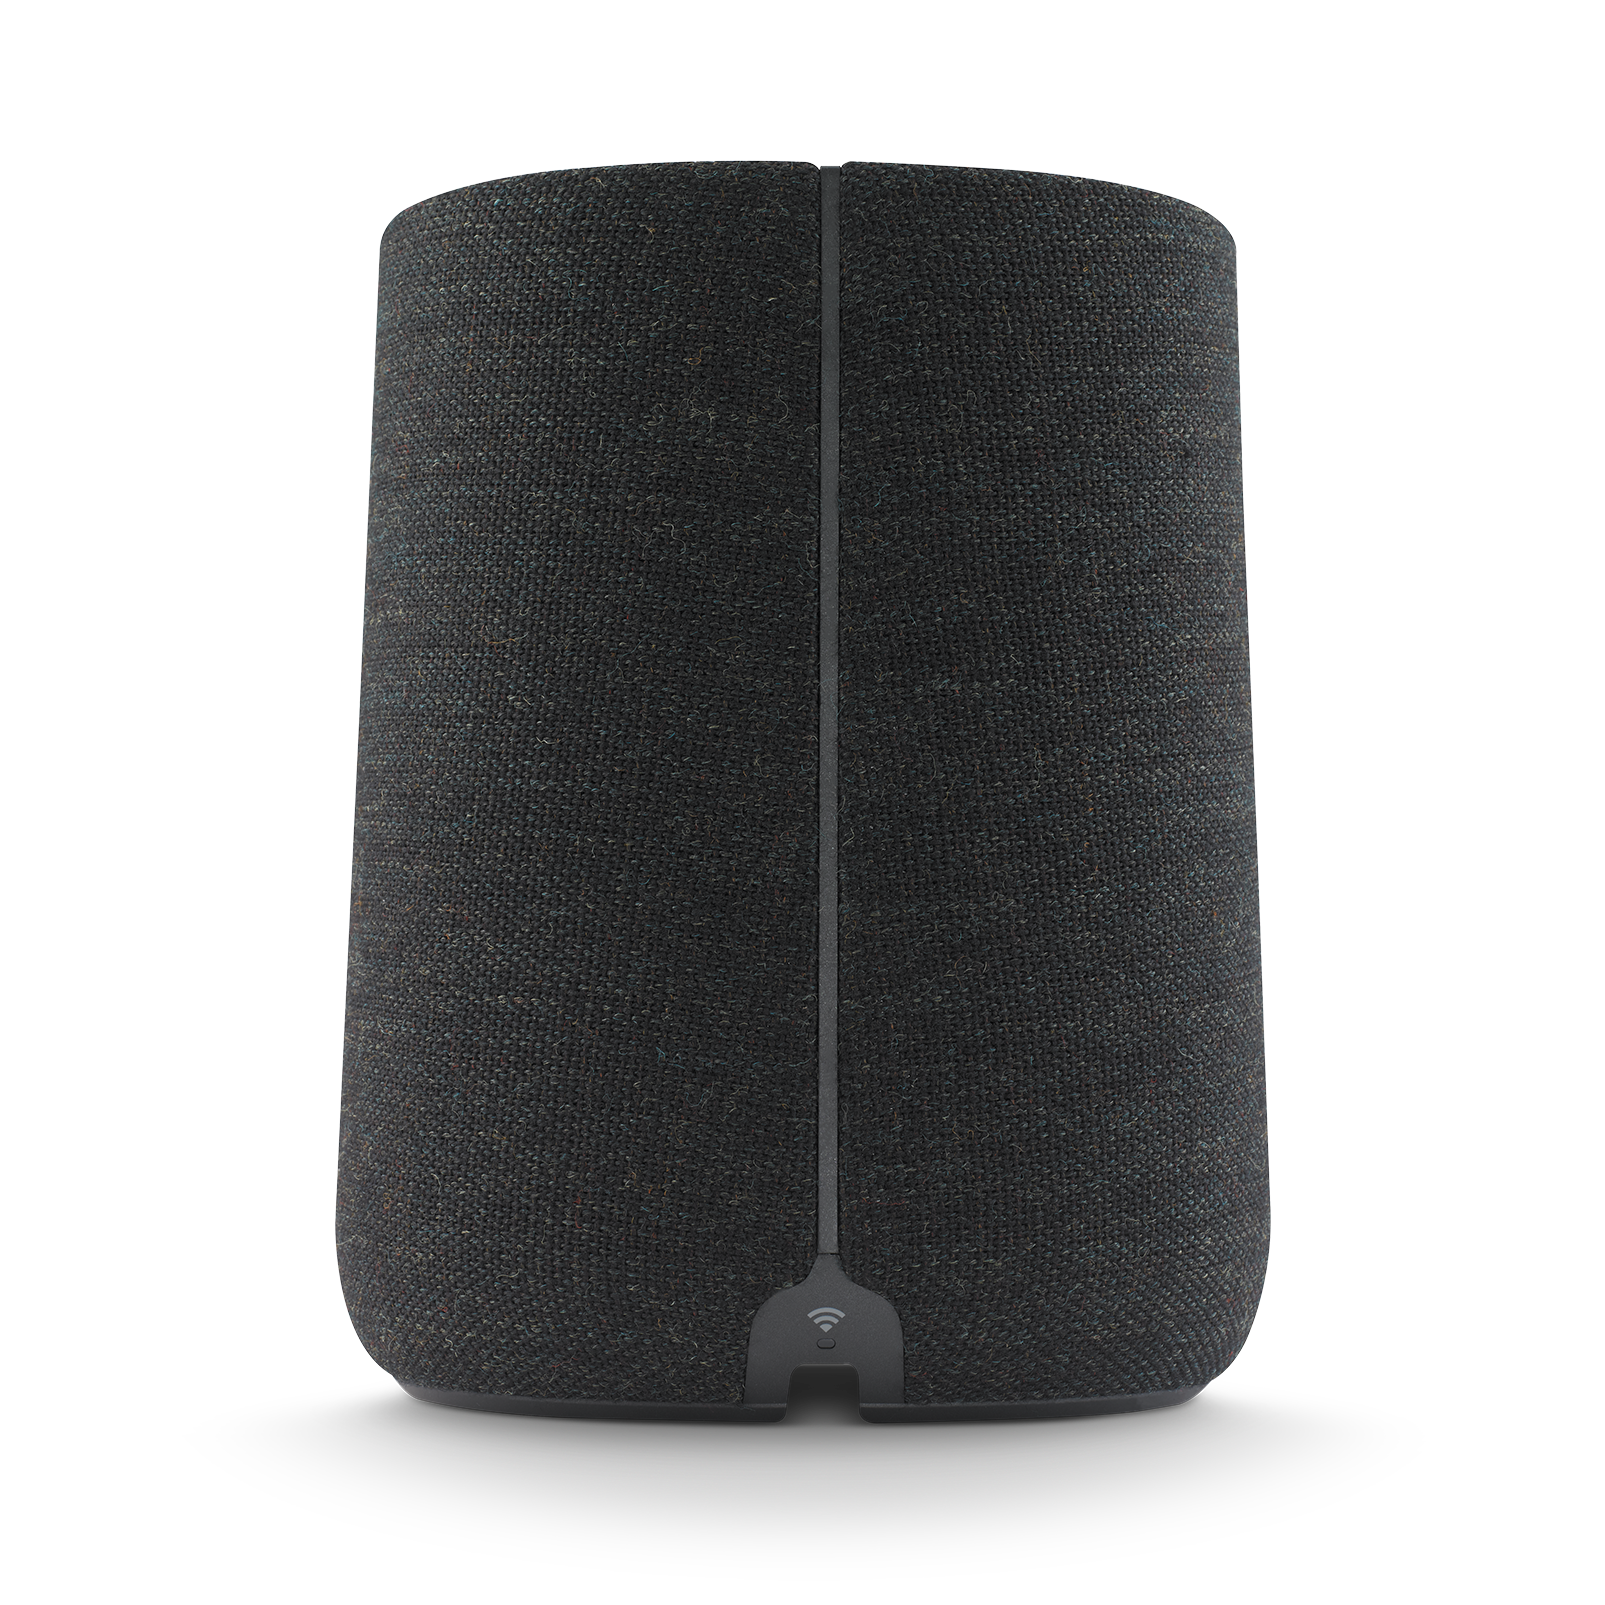 Harman Kardon Citation One MKIII - Black - All-in-one smart speaker with room-filling sound - Back